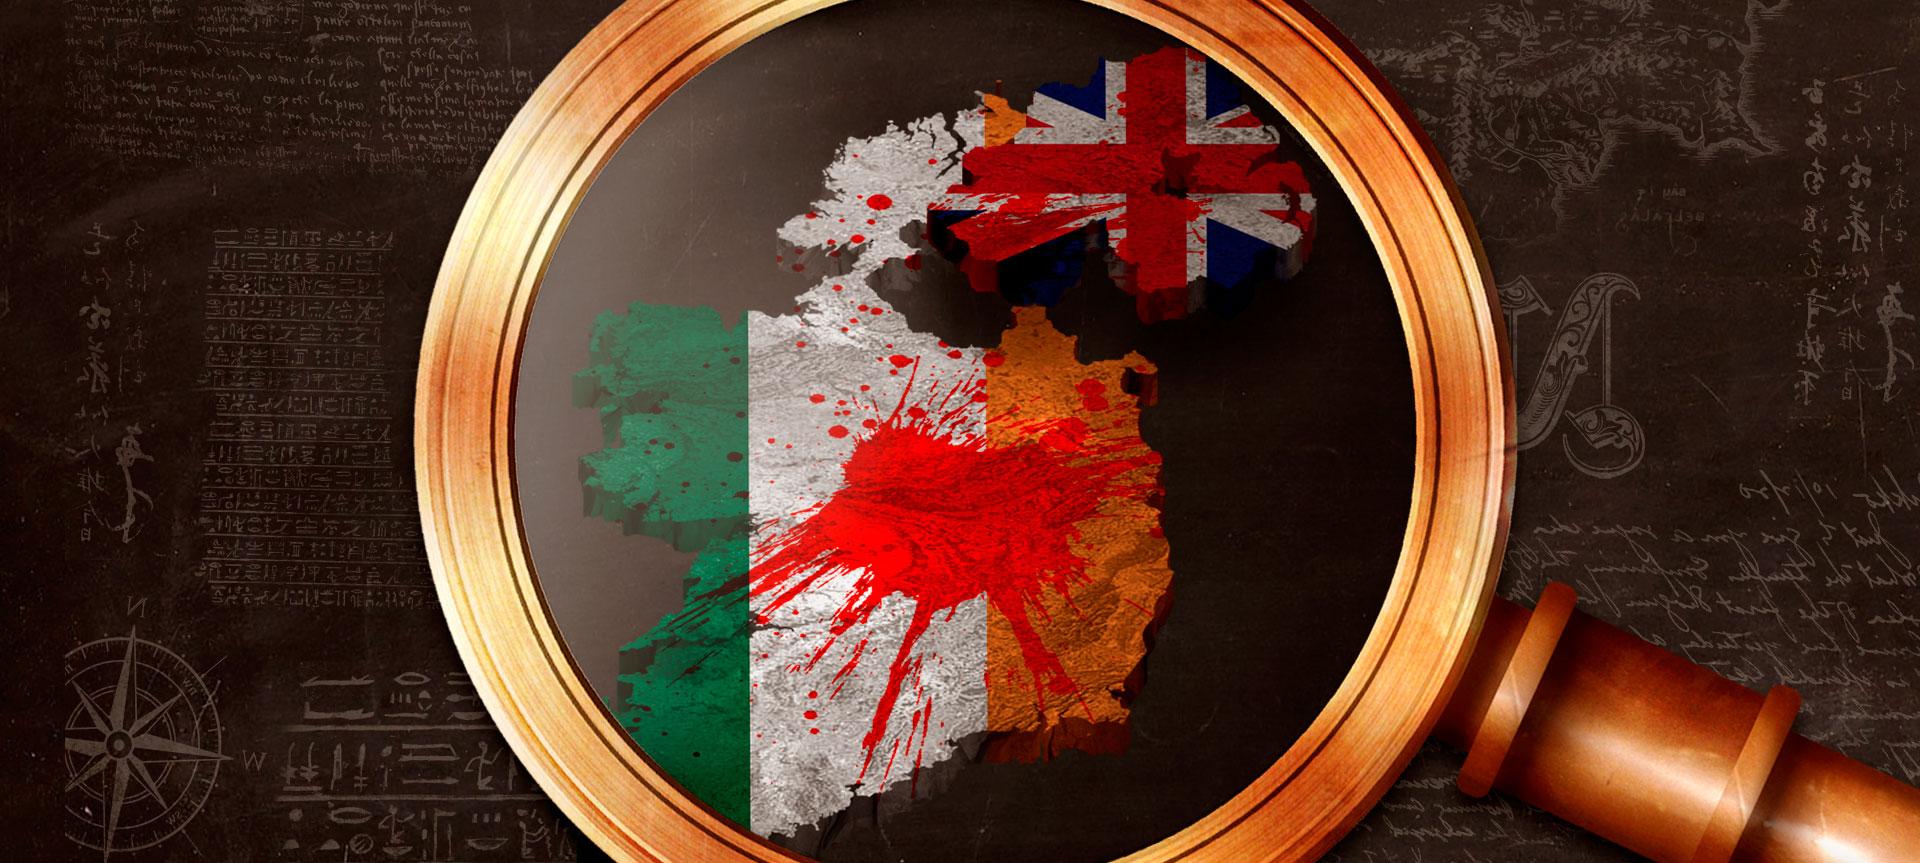 Conflito na Irlanda